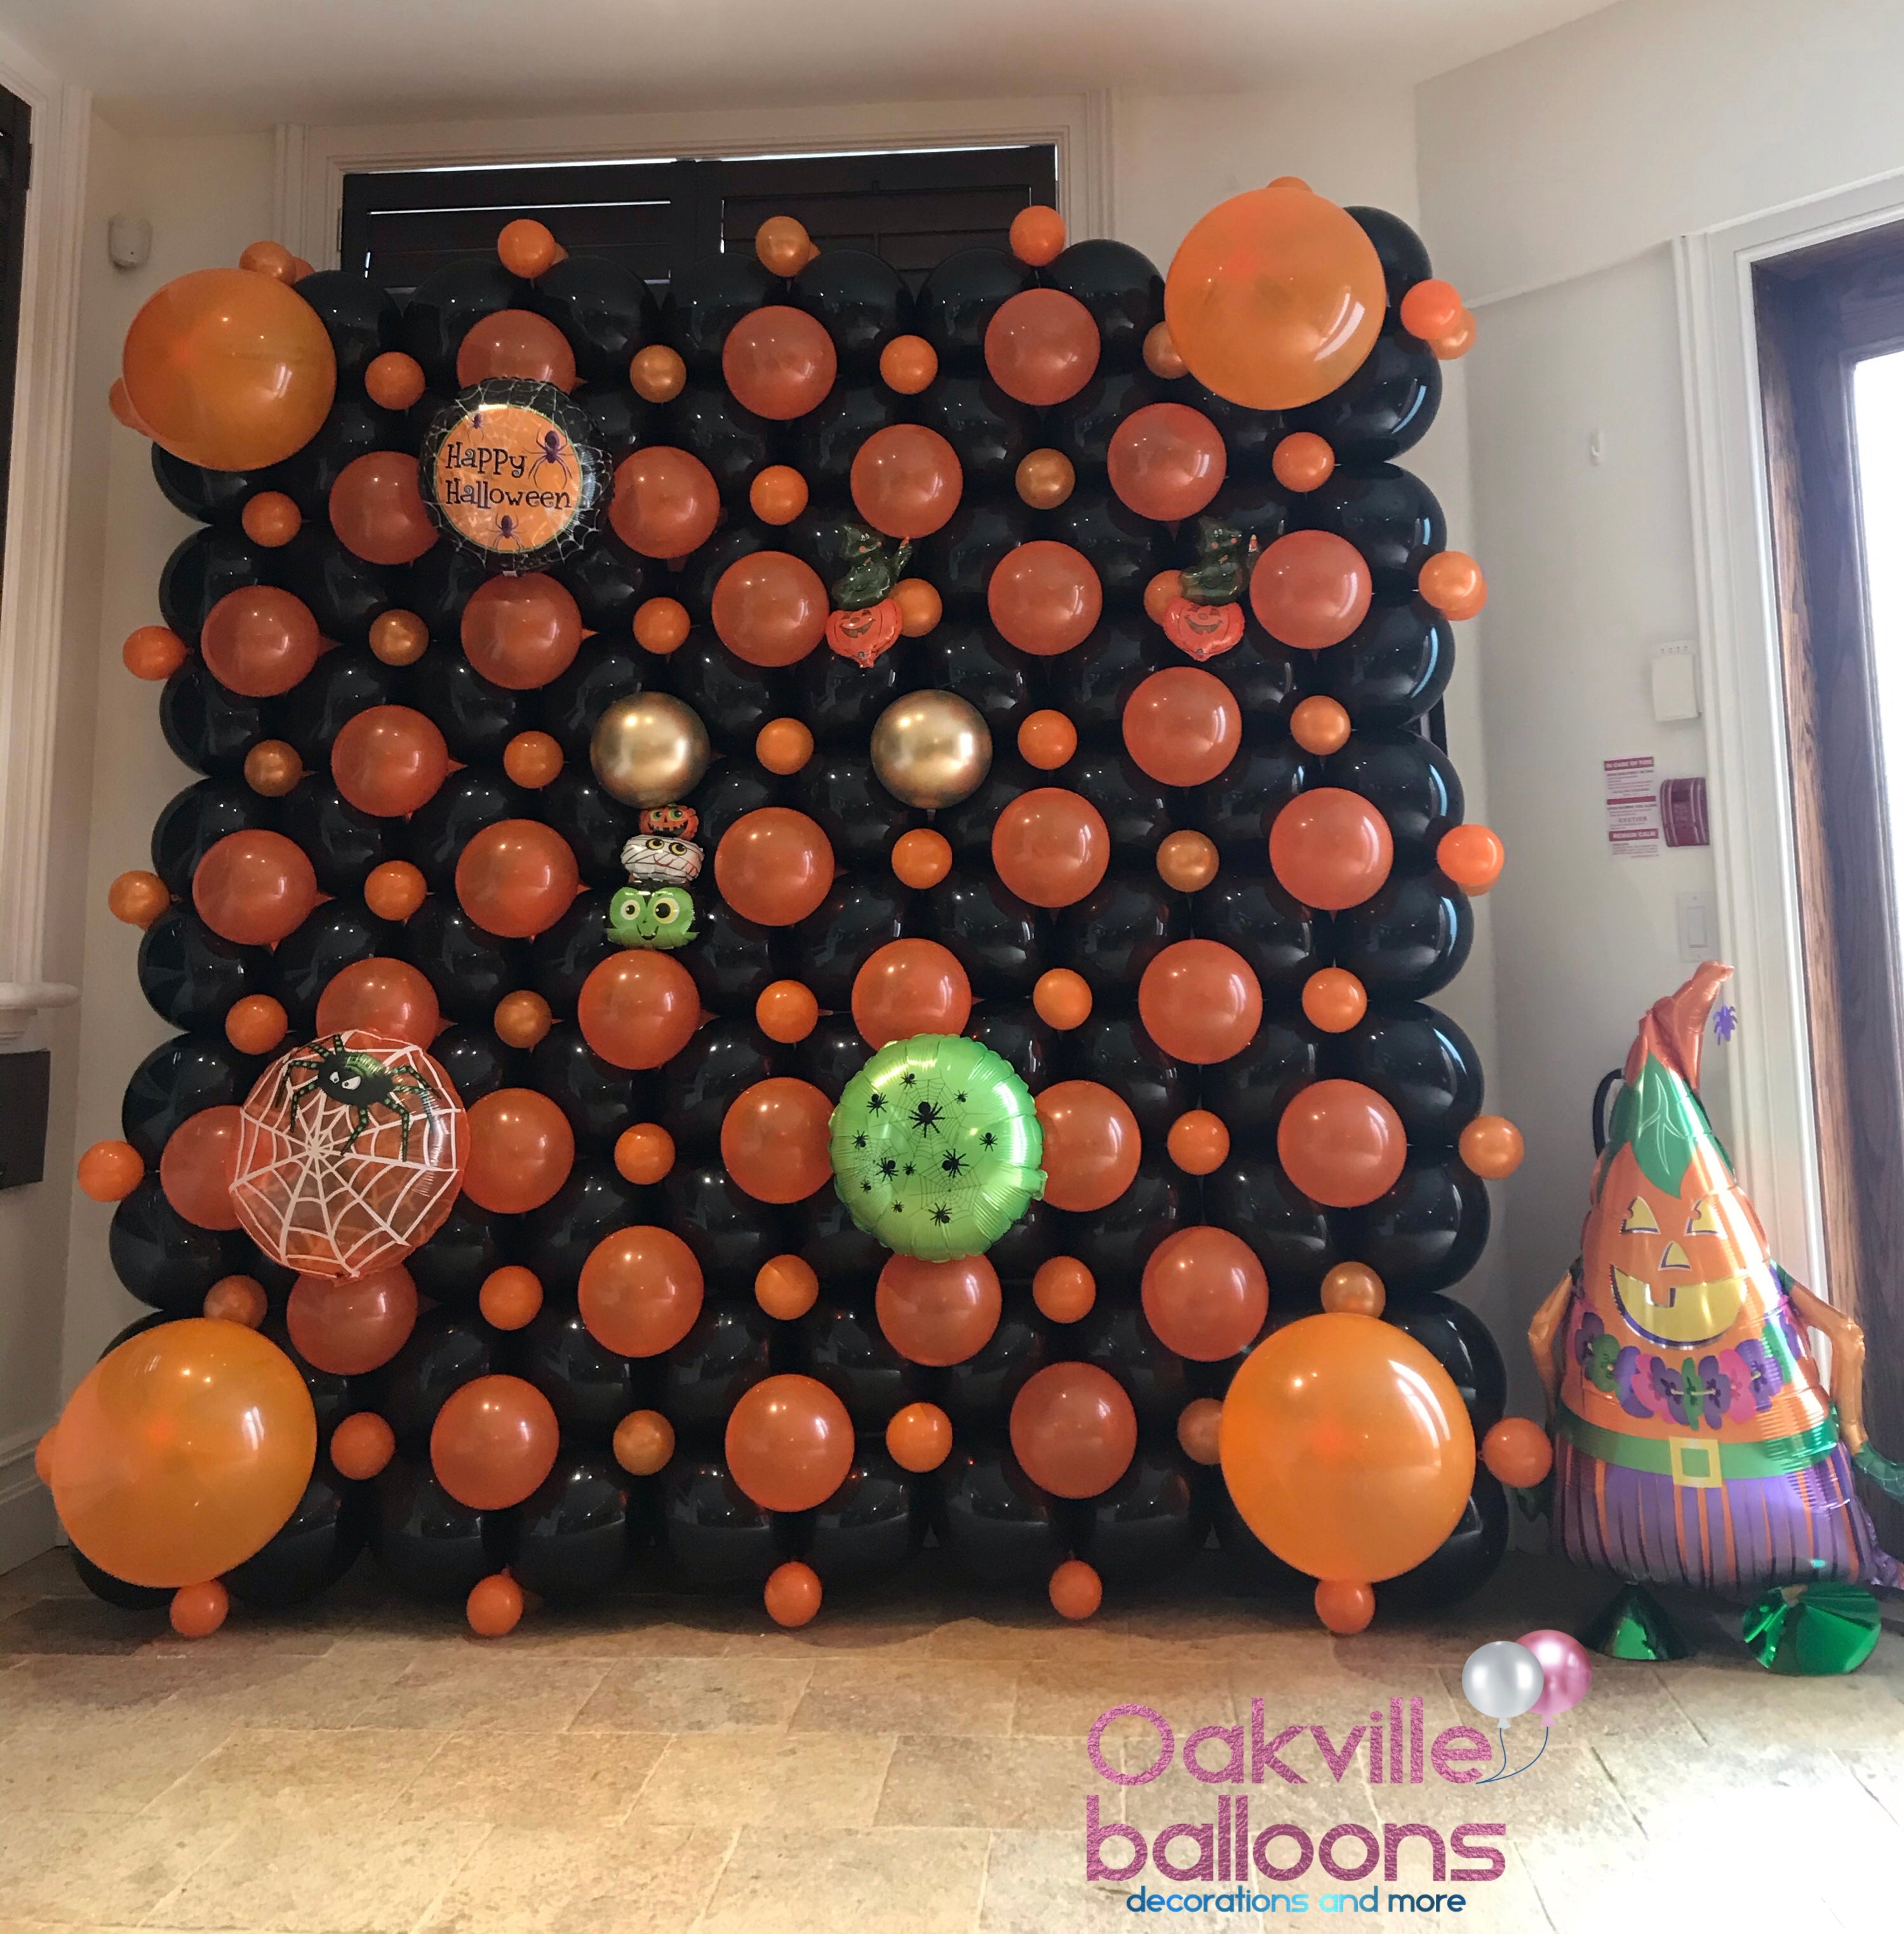 Balloon symmetrical wall display in orange and black.